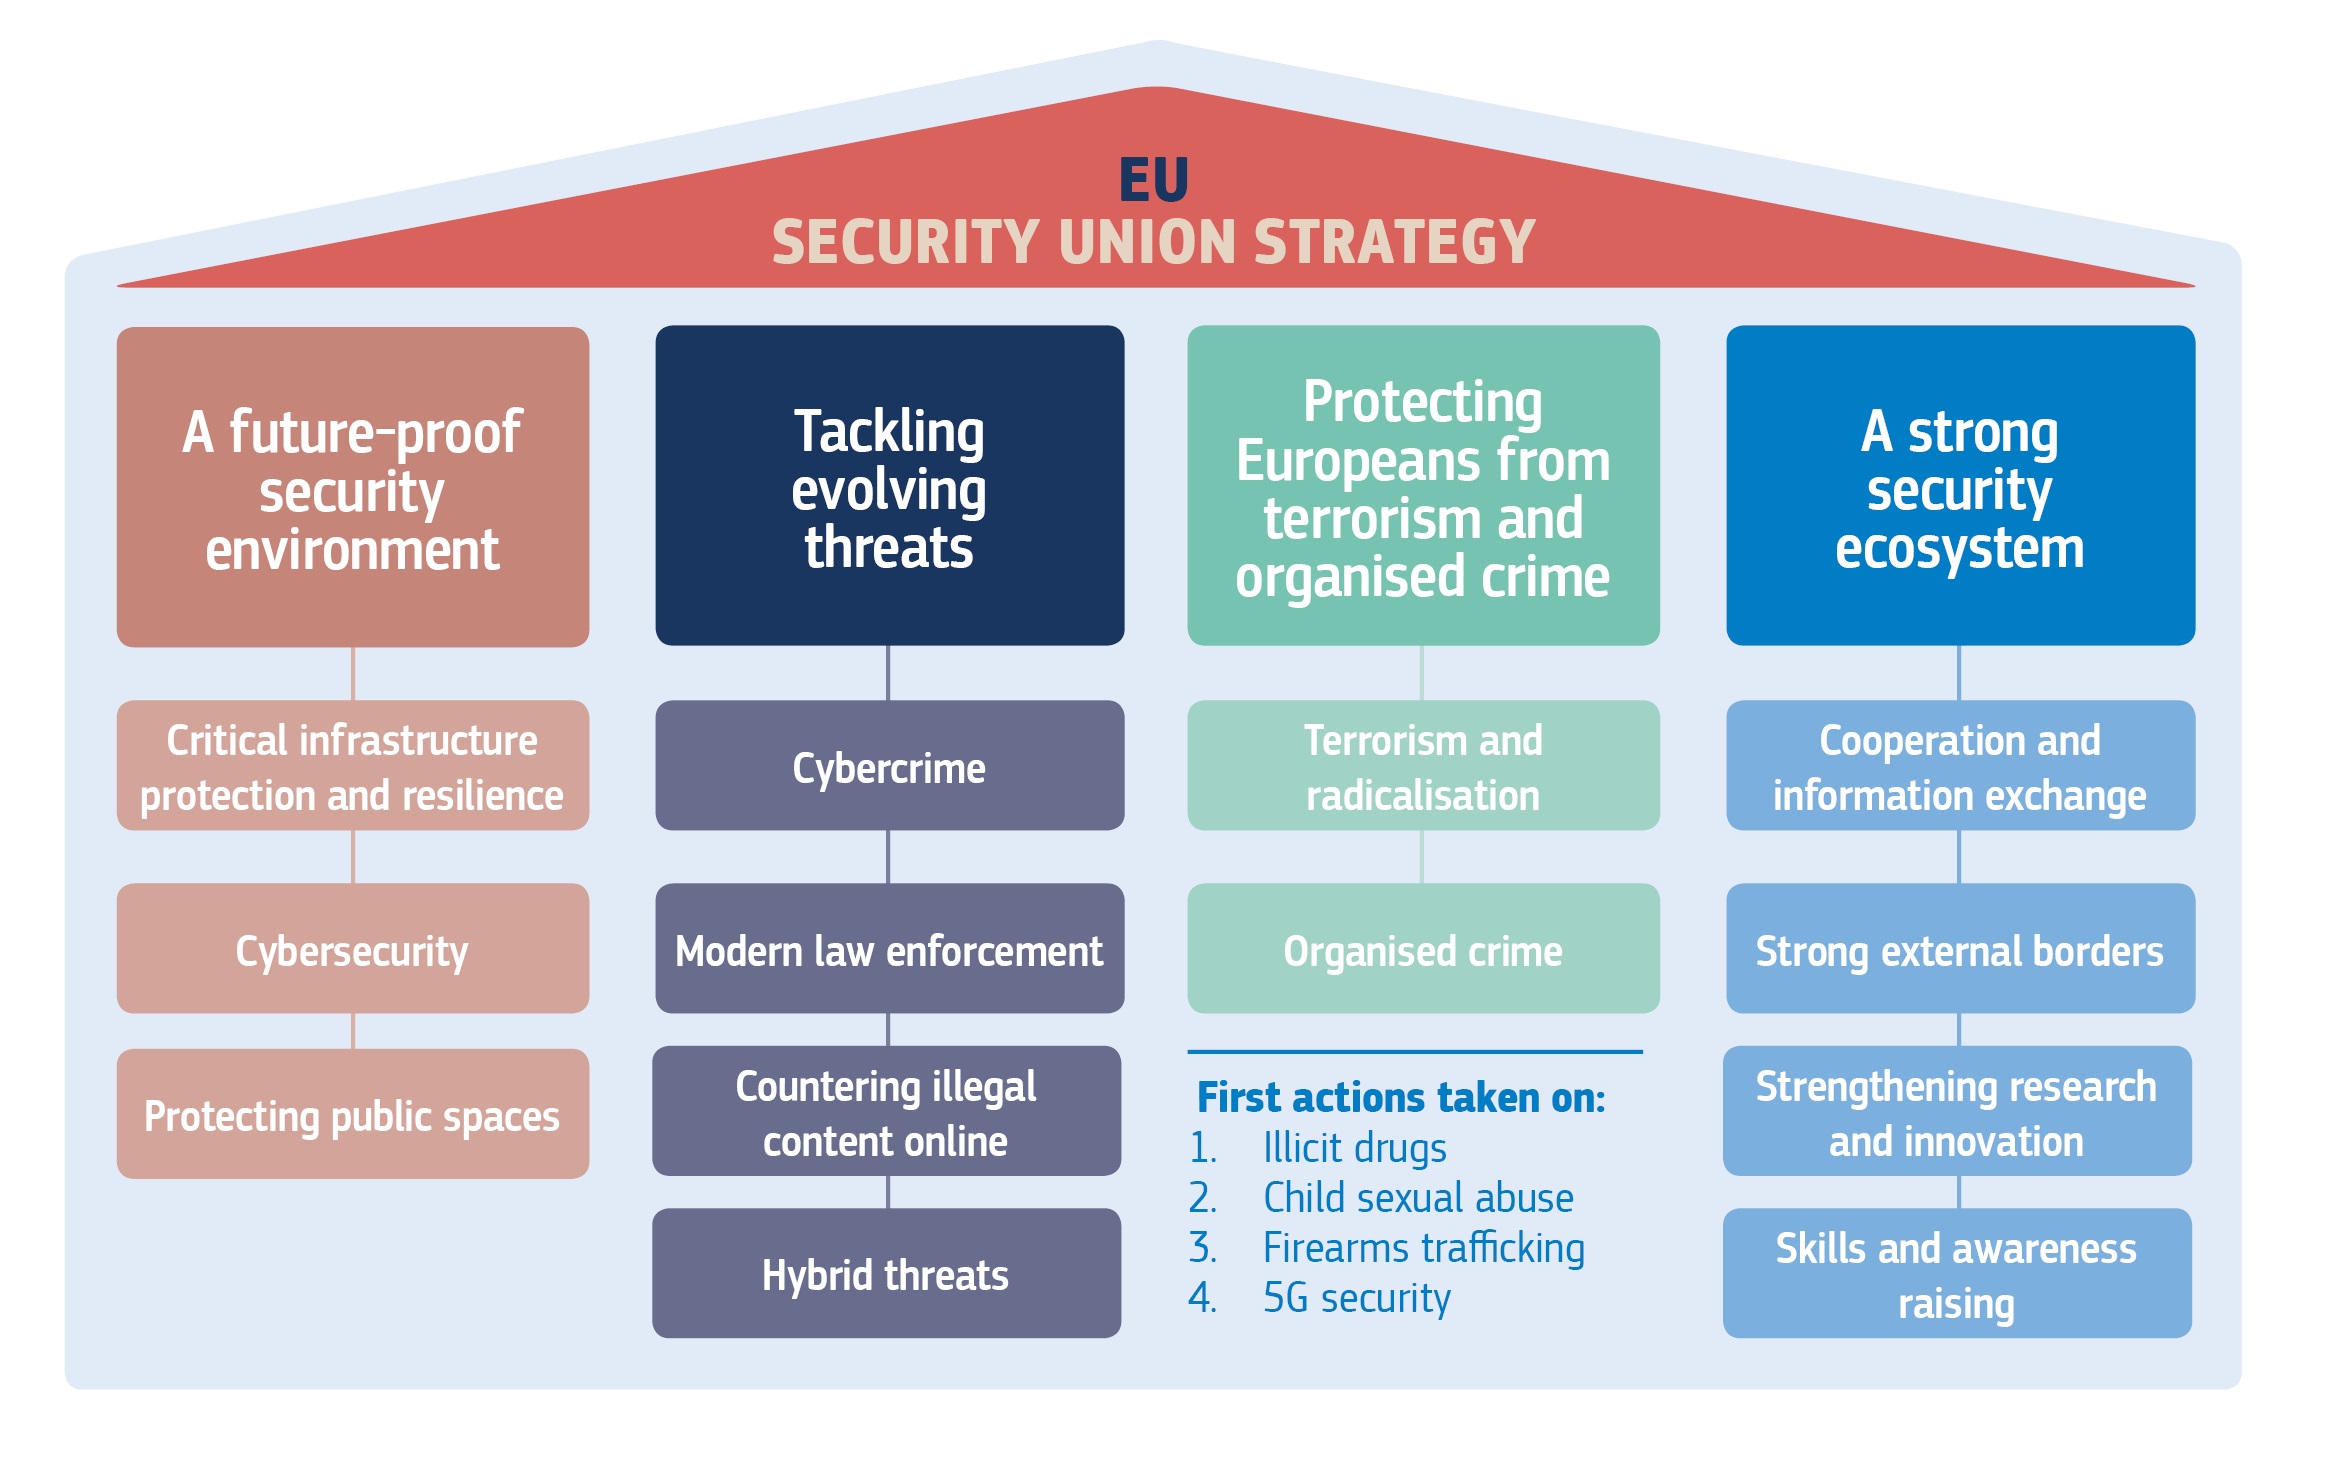 Security Union Strategy visual - copyright: European Union